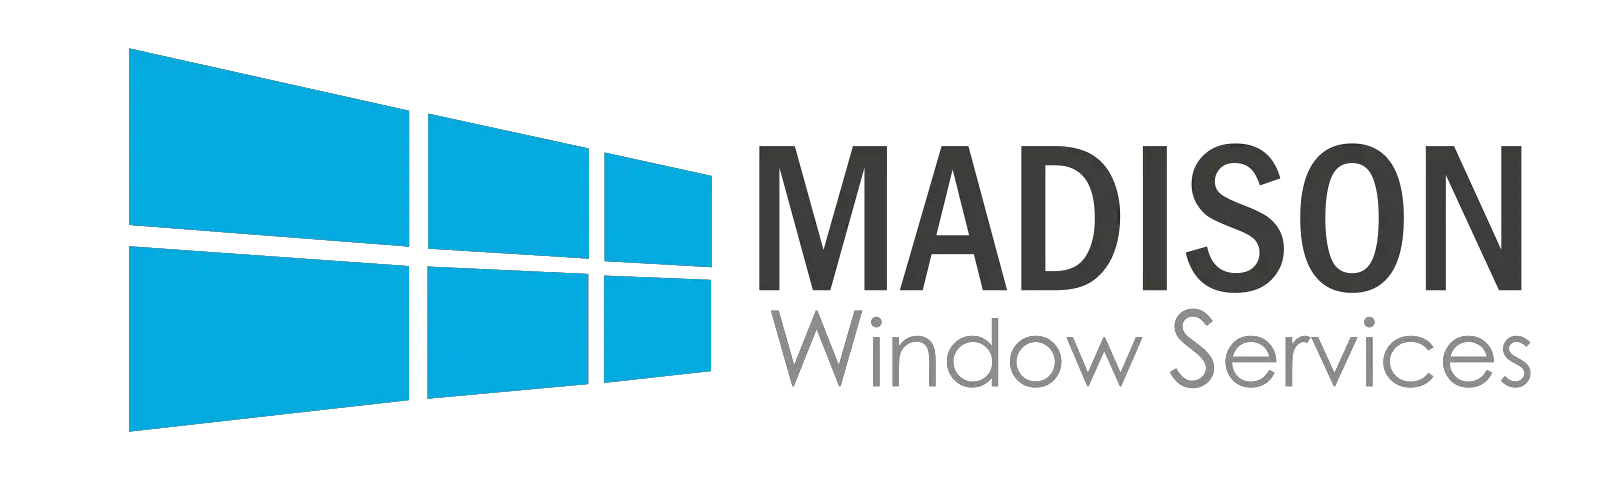 Company logo of Madison Window Services